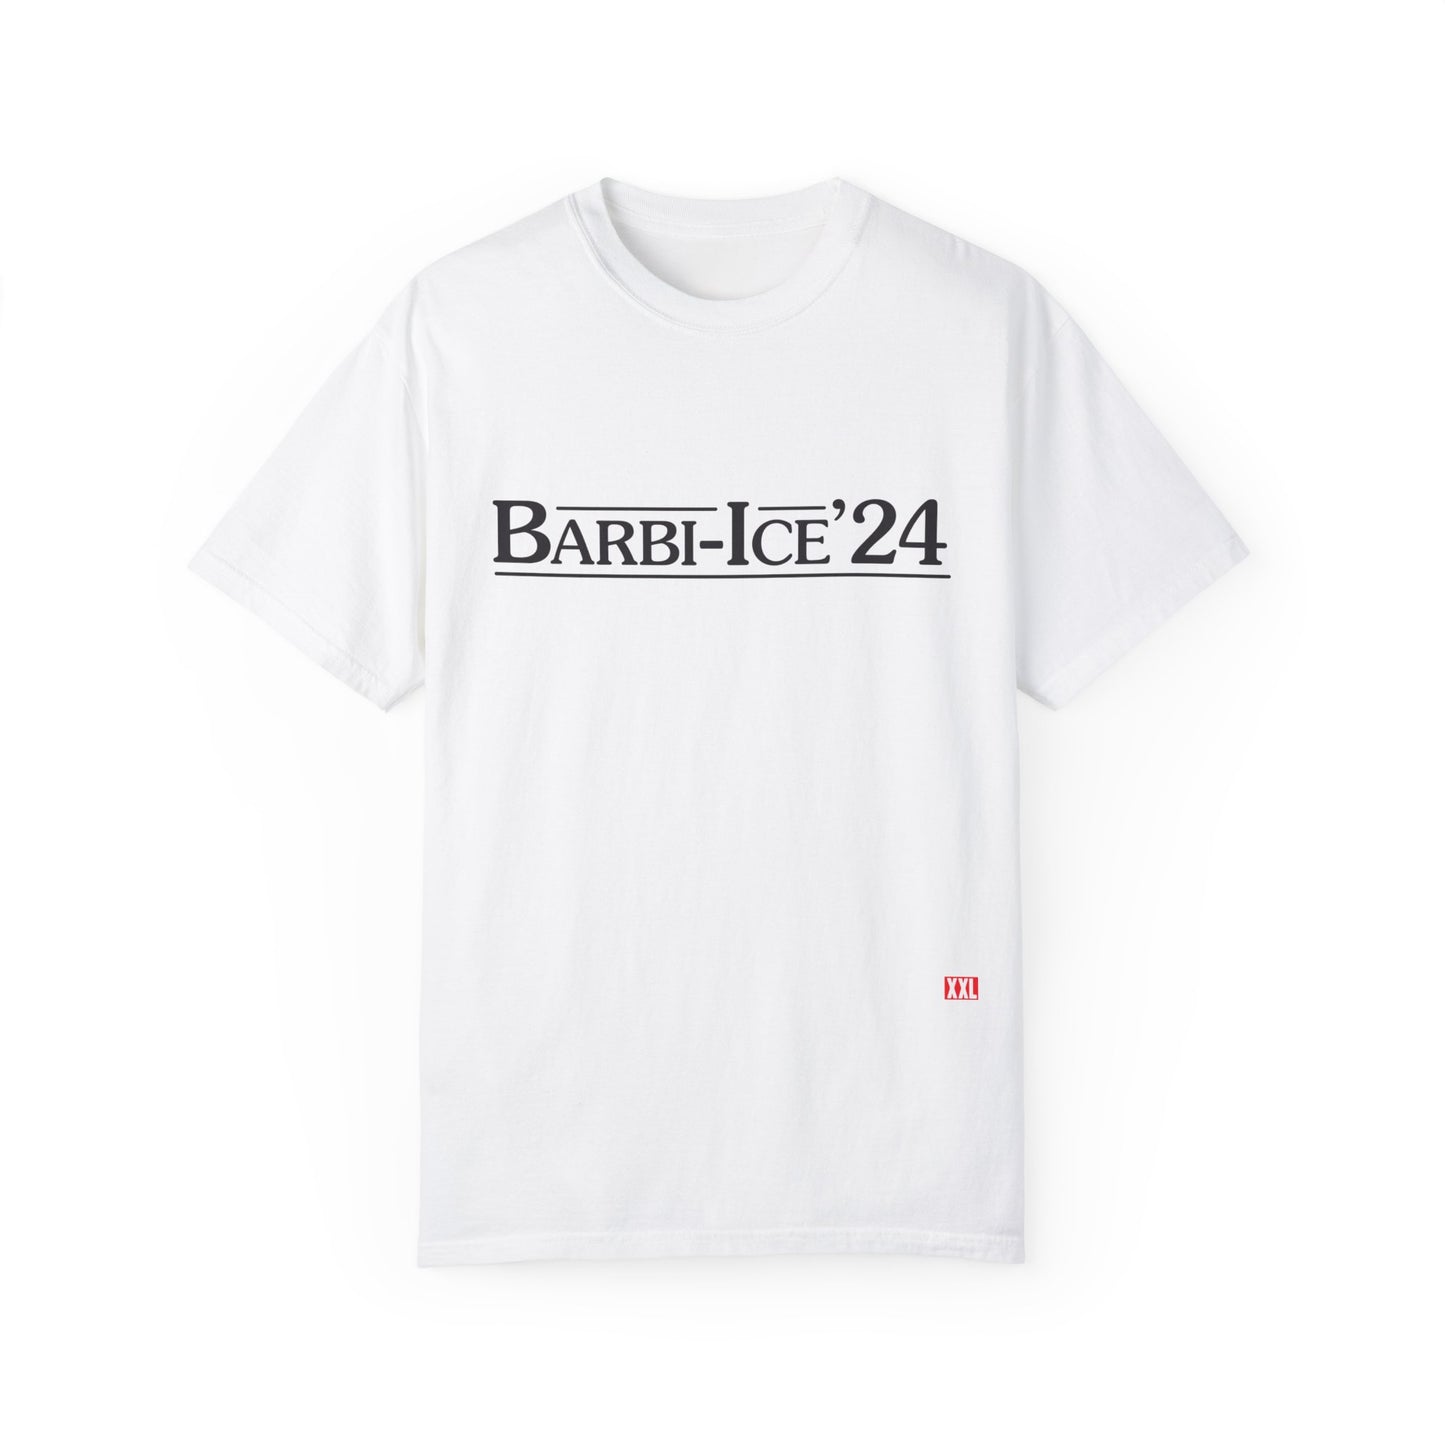 Barbie-Ice '24 T- Shirt